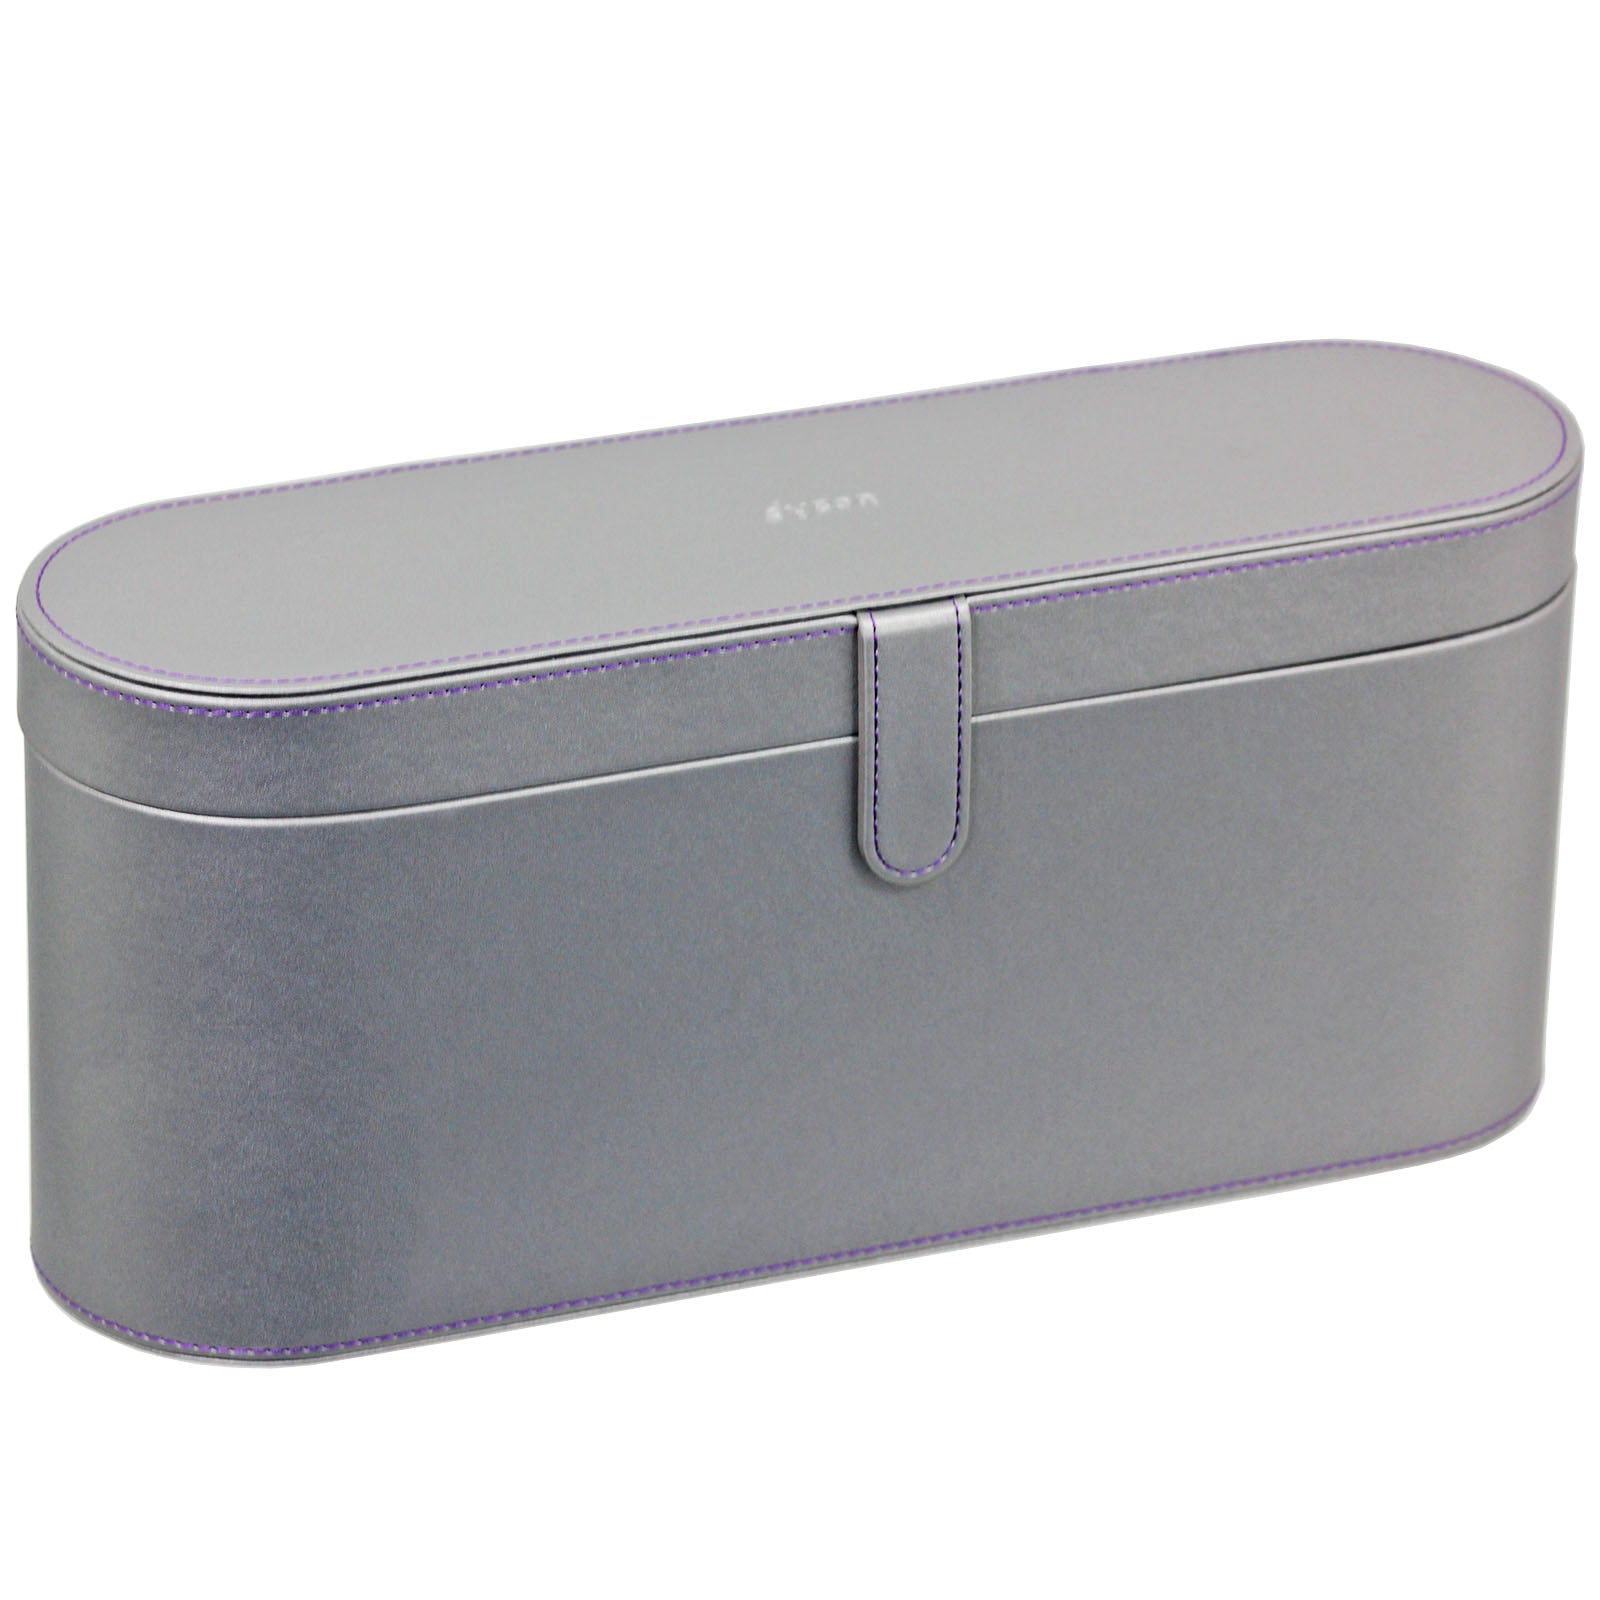 DYSON Supersonic™ Hair Dryer Box Travel Storage Presentation Case (Silver)